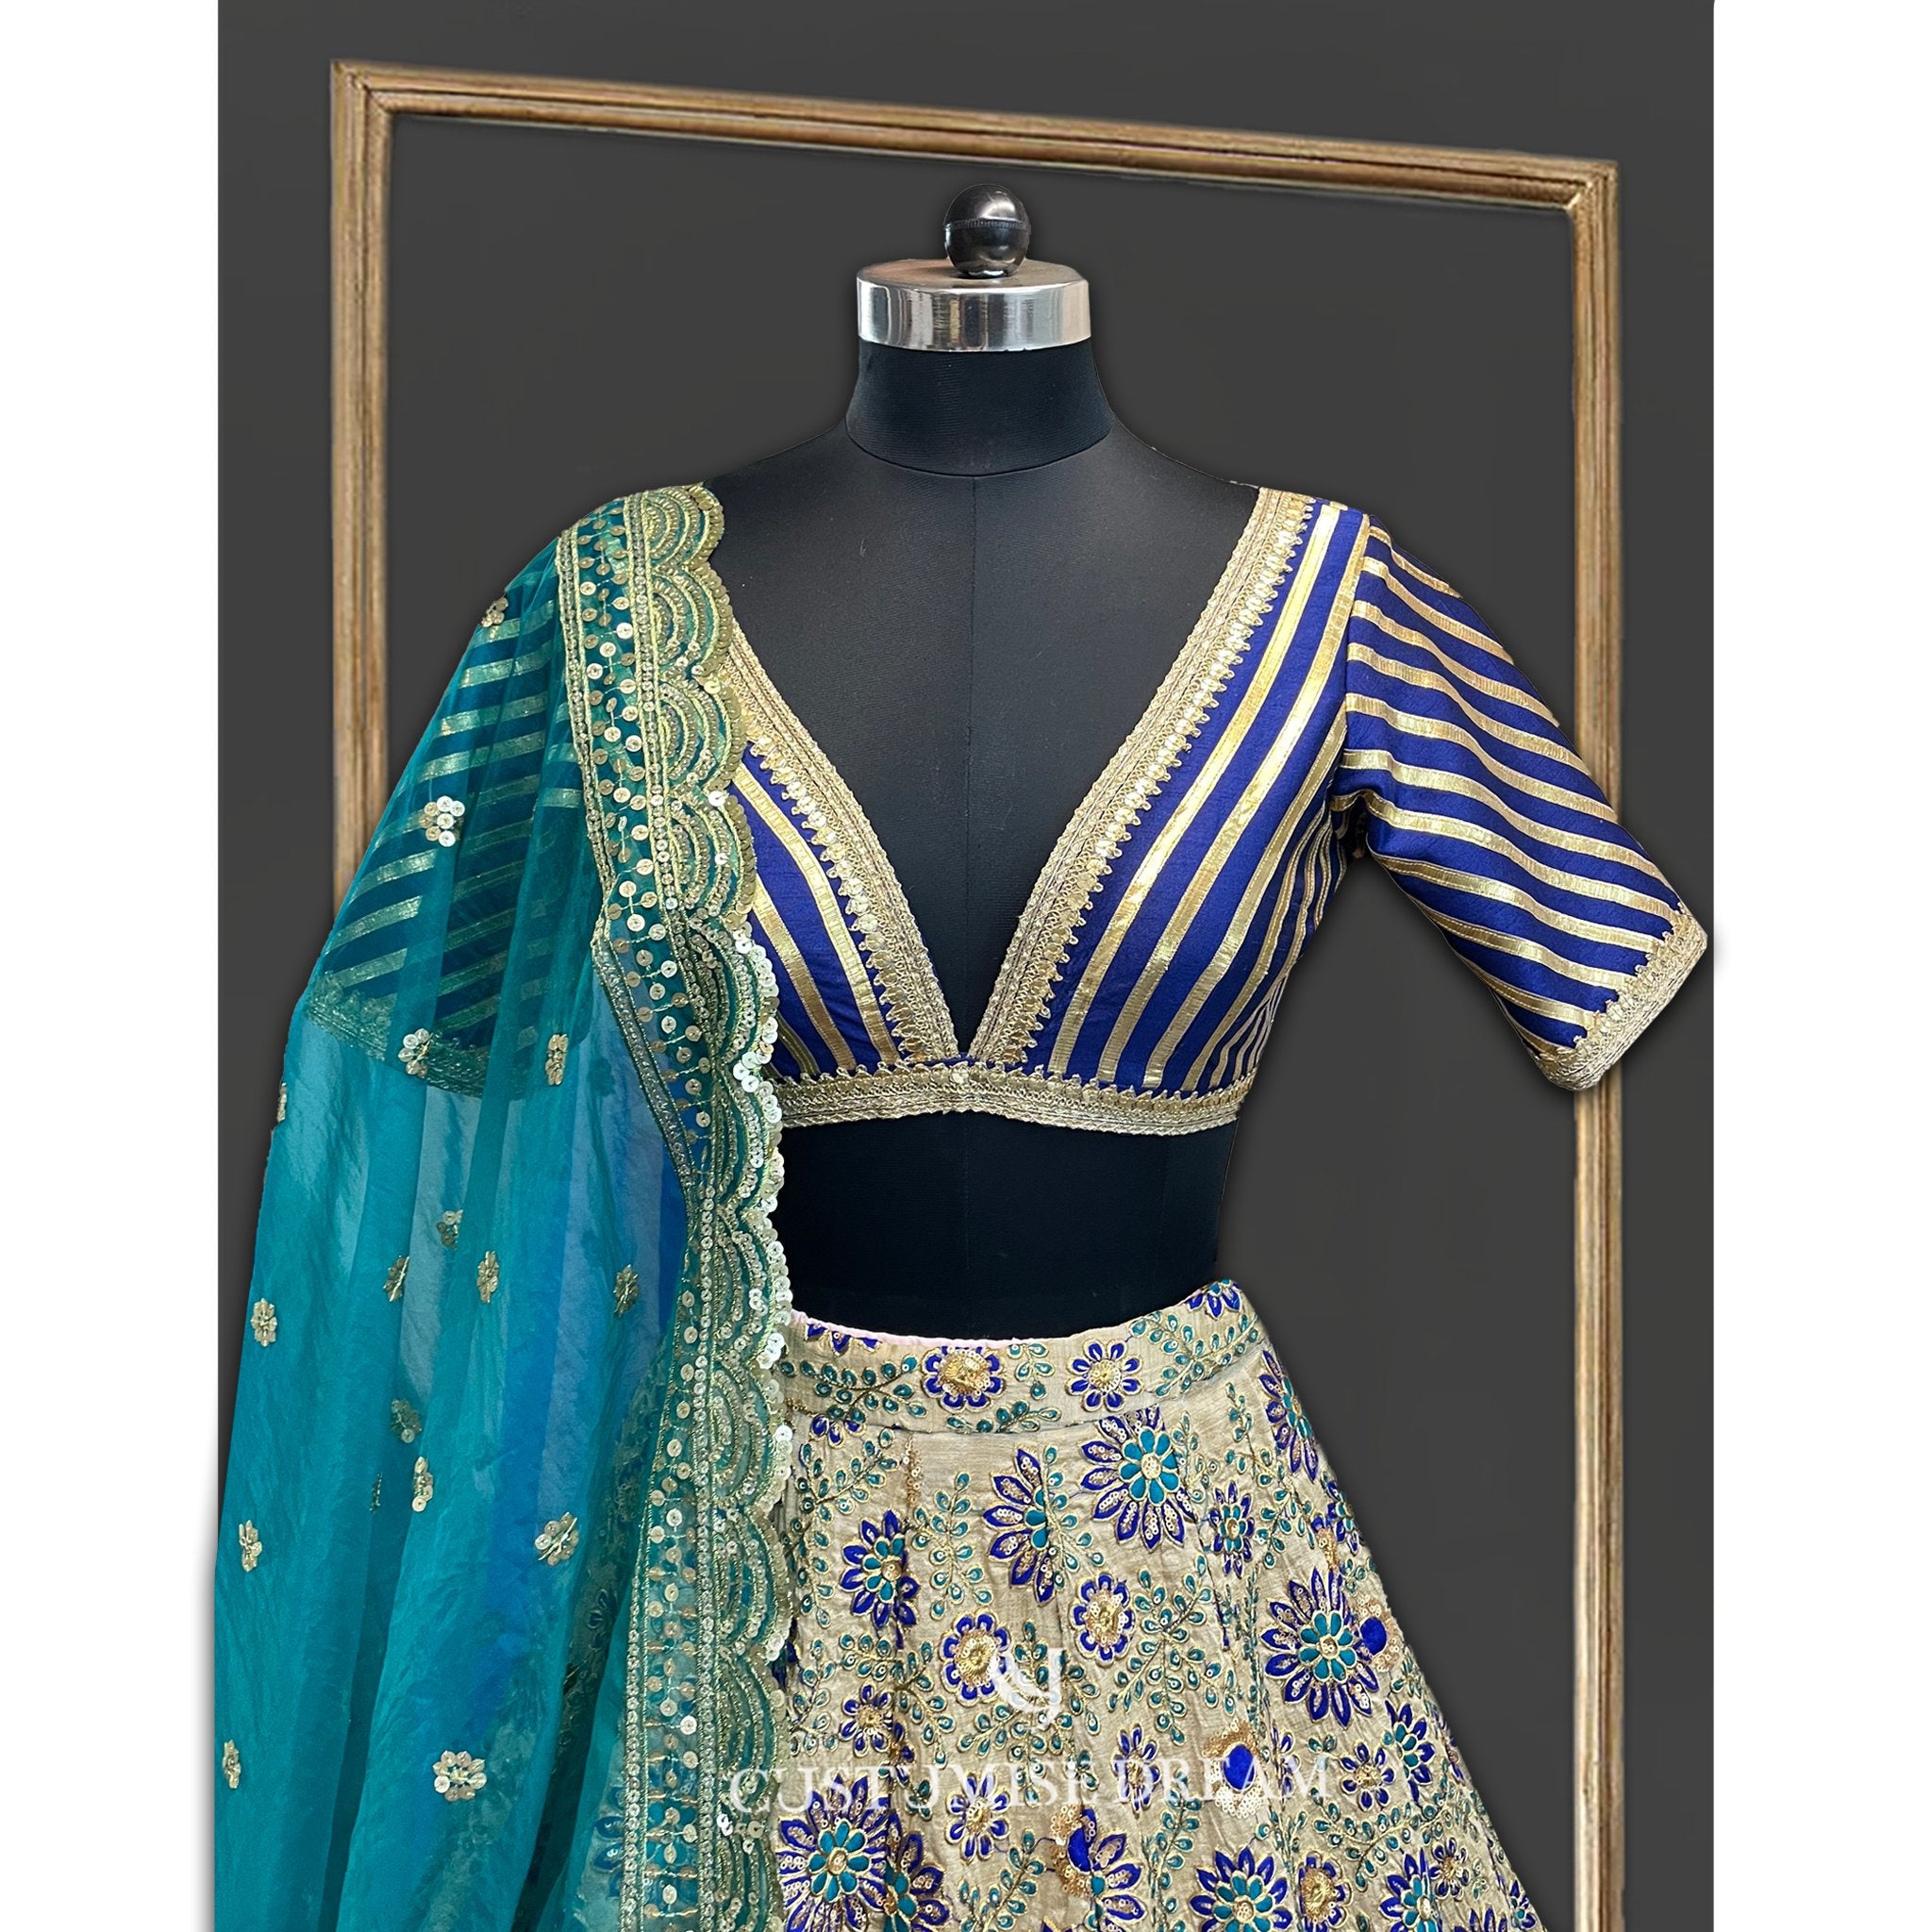 Golden Elegance: Peacock Hues Royal Lehenga - Indian Designer Bridal Wedding Outfit